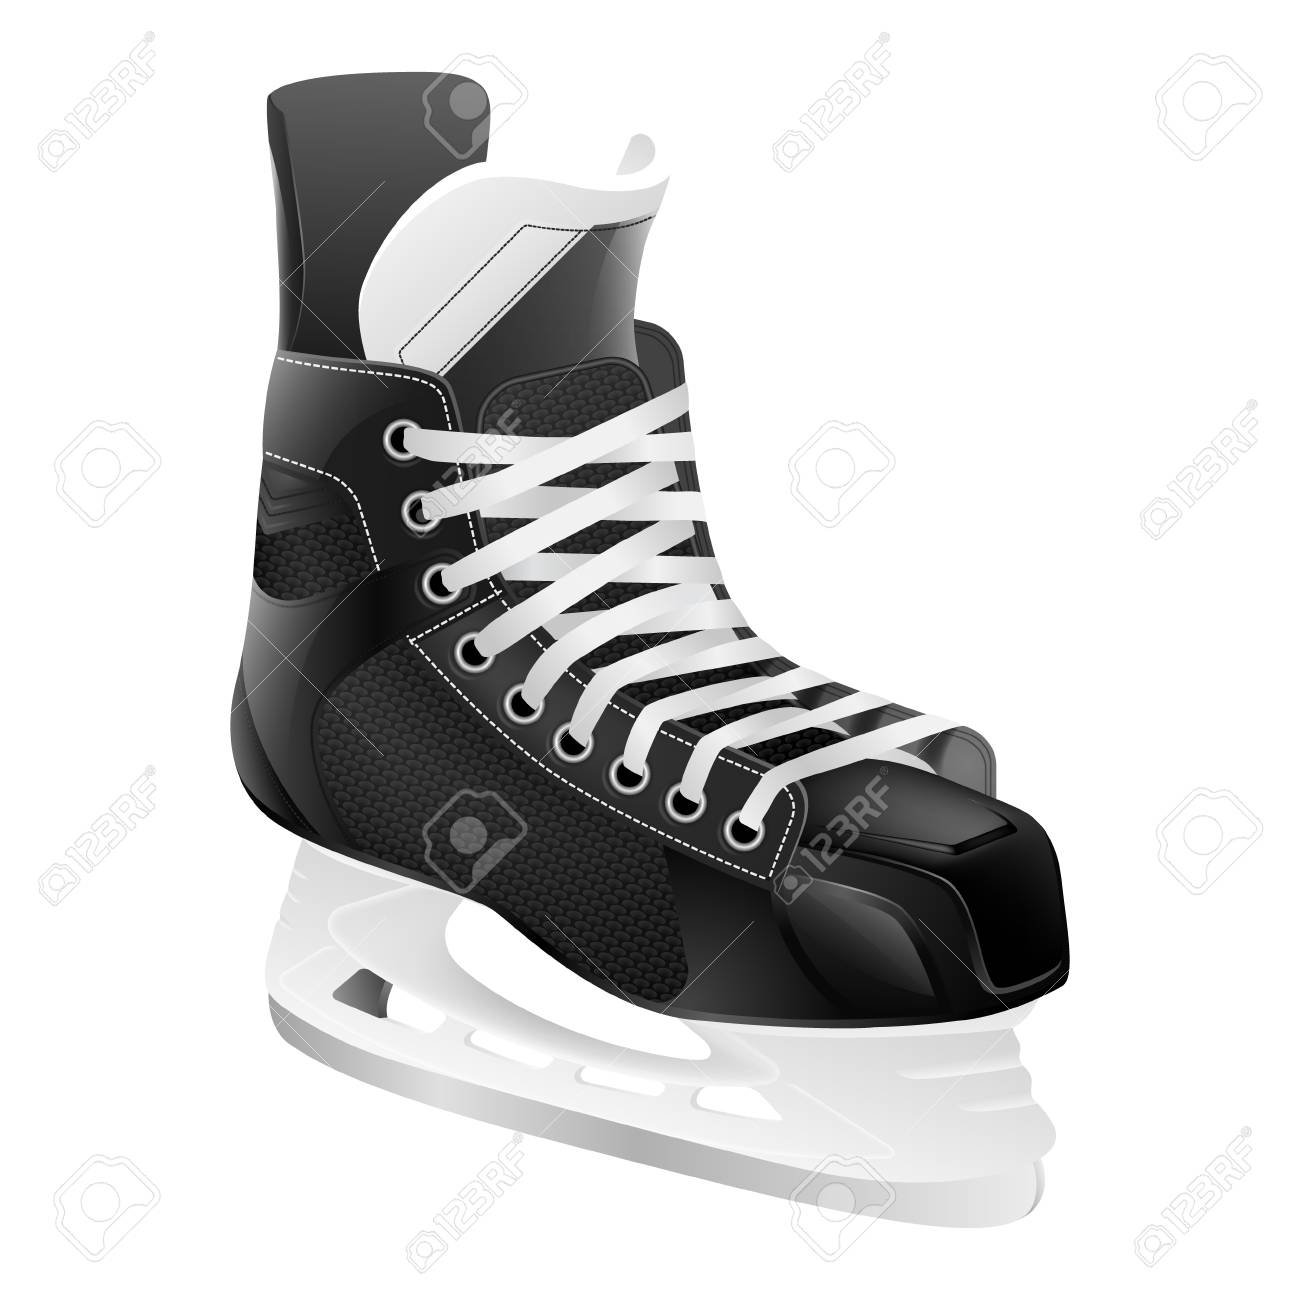 Ice hockey skate. Хоккейные коньки. Коньки хоккейные арт. Значок хоккейный конек. Наклейки на коньки хоккейные.